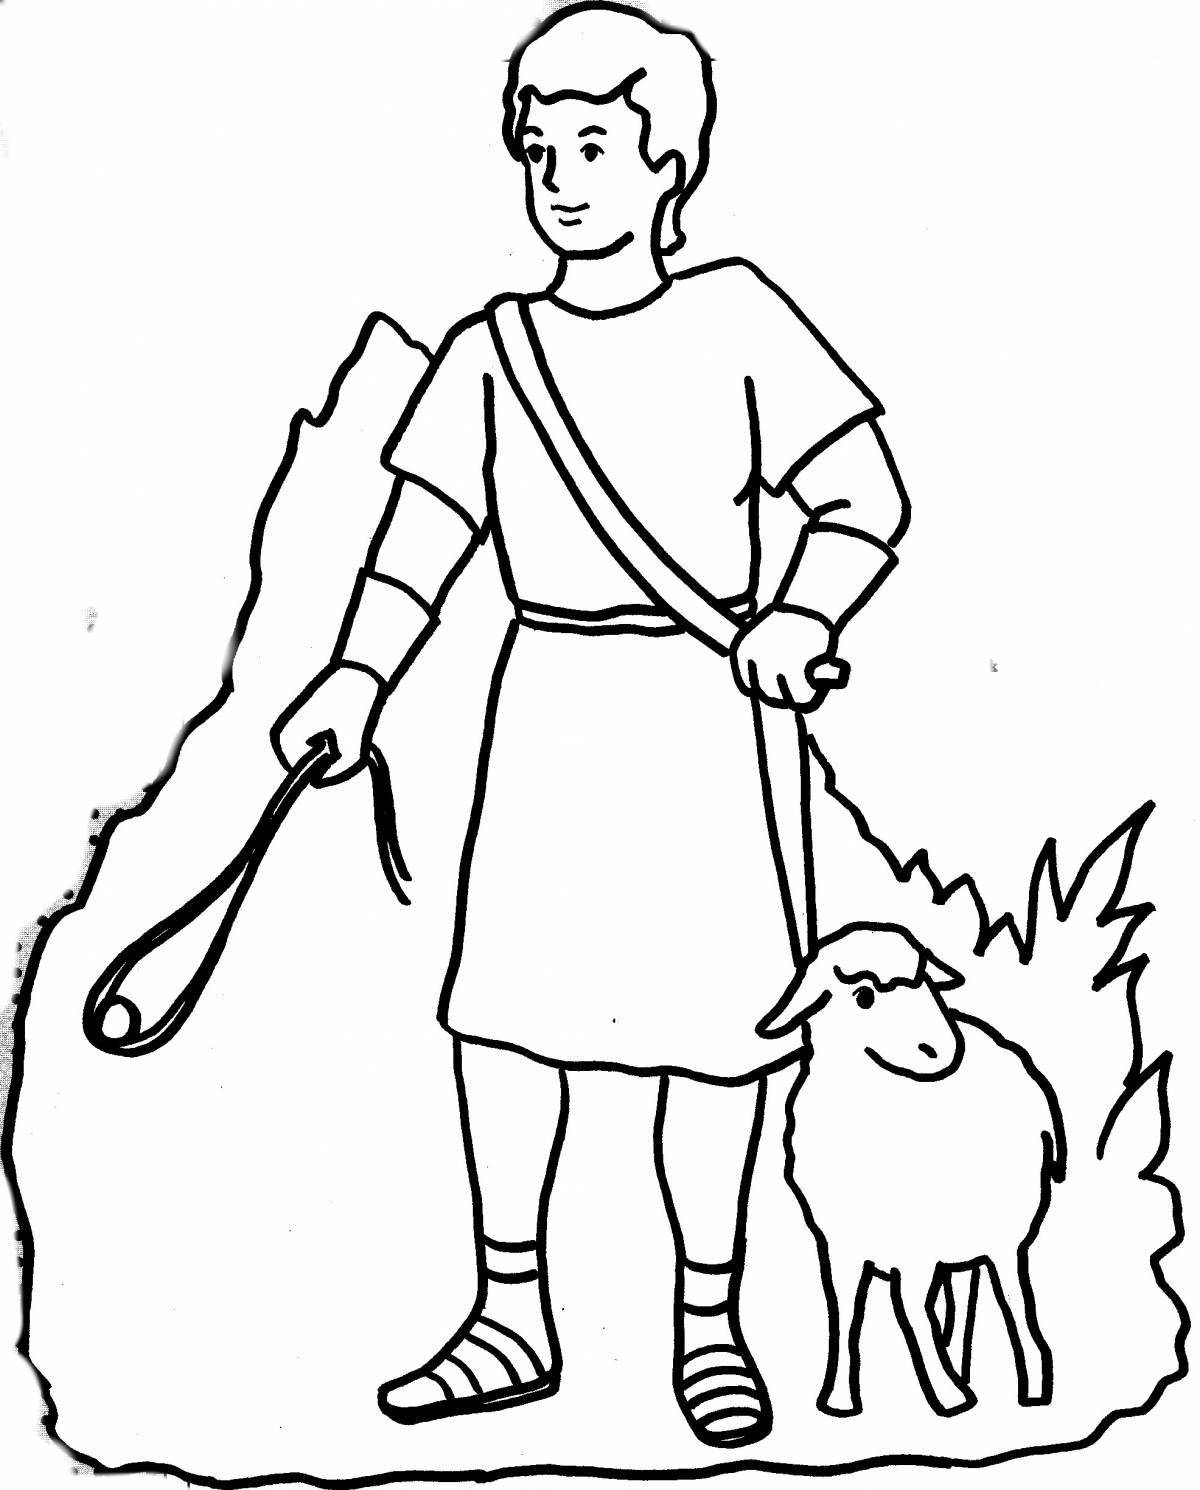 Color-loving shepherd boy coloring book